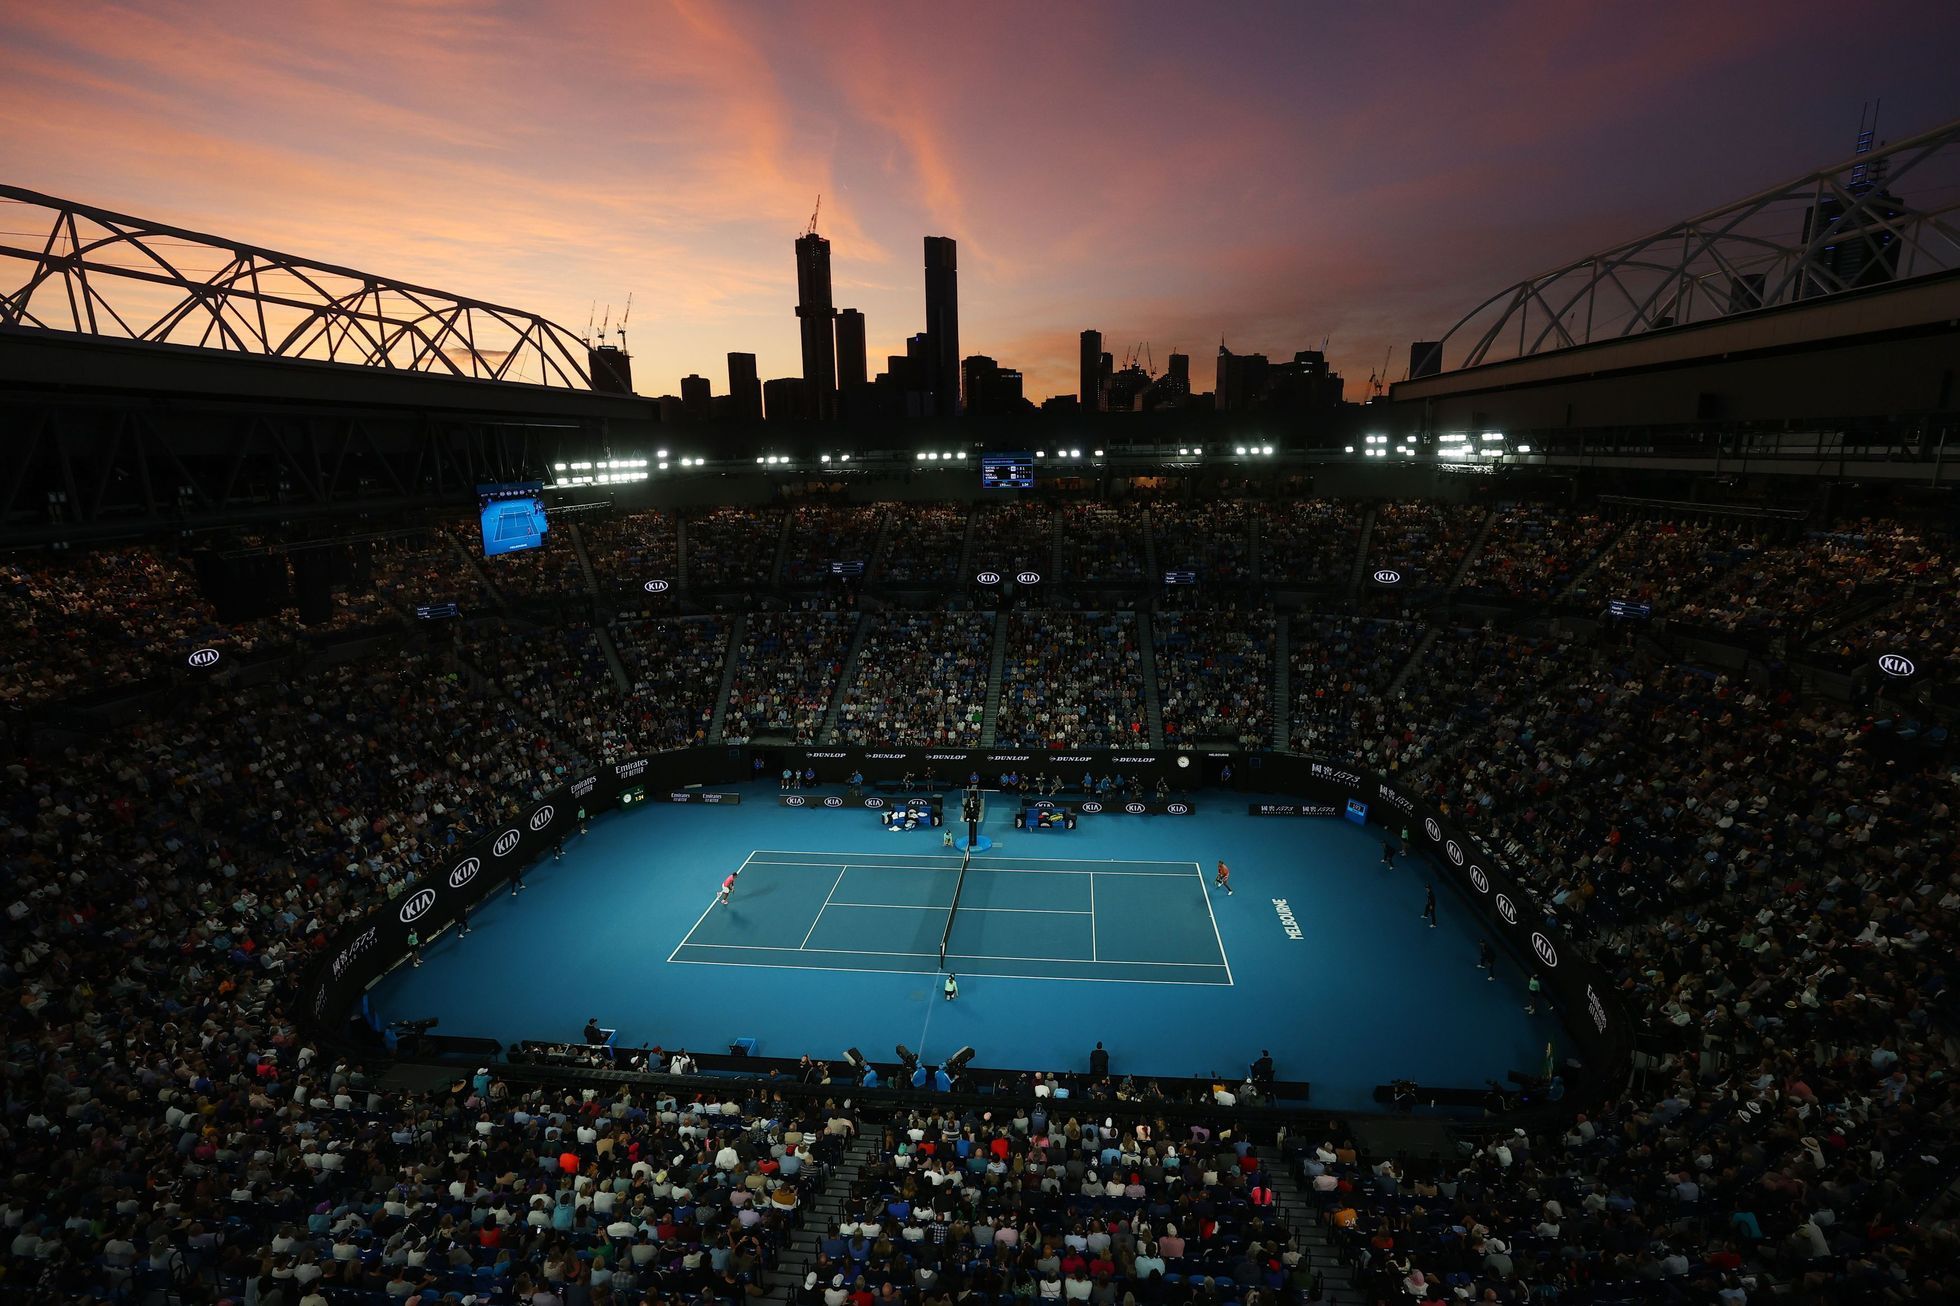 Nick Kyrgios vs. Rafael Nadal, Australian Open 2020, osmifinále